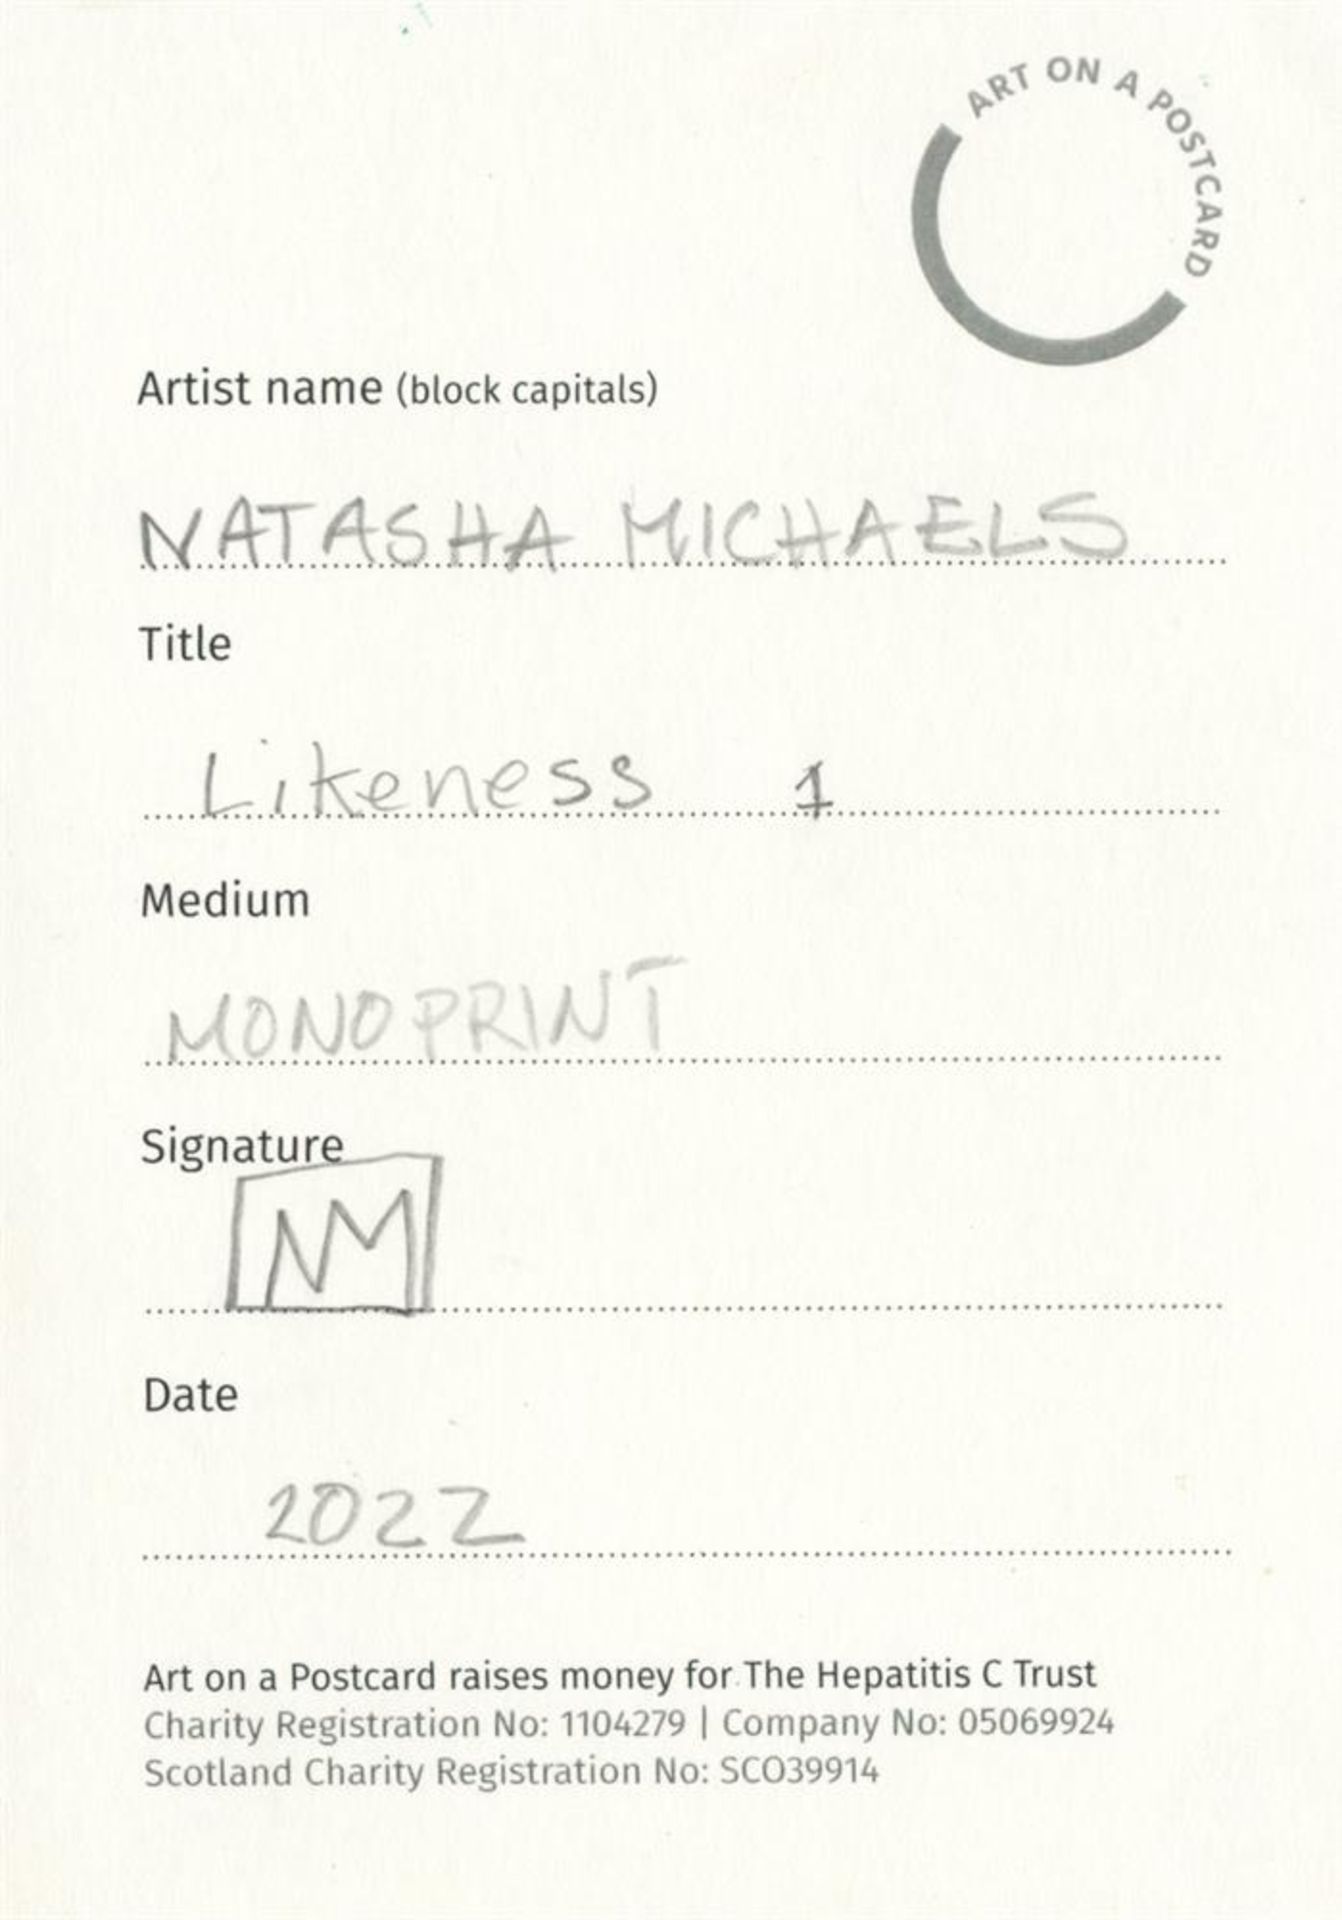 Natasha Michaels, Likeness I, 2022 - Image 2 of 3